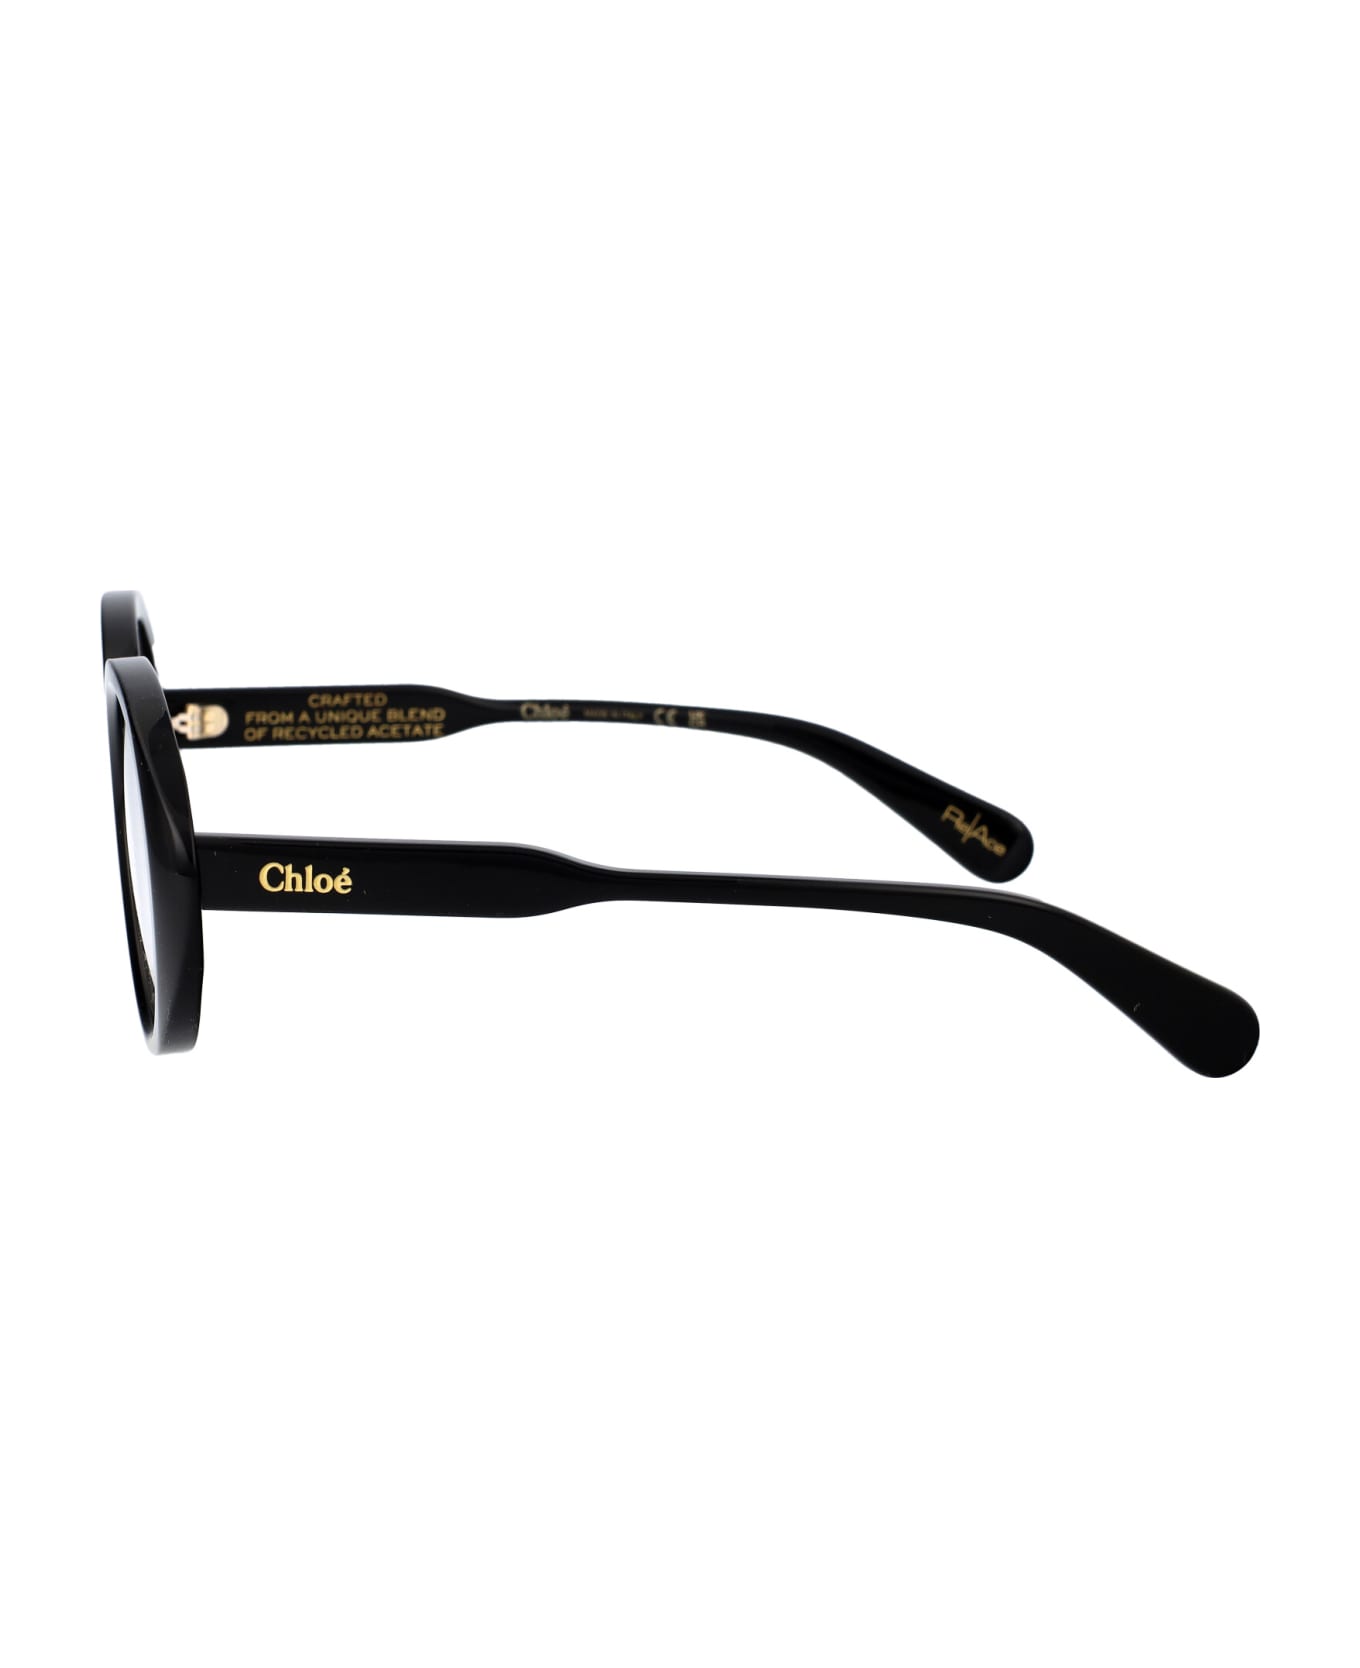 Chloé Eyewear Ch0221o Glasses - 001 BLACK BLACK TRANSPARENT